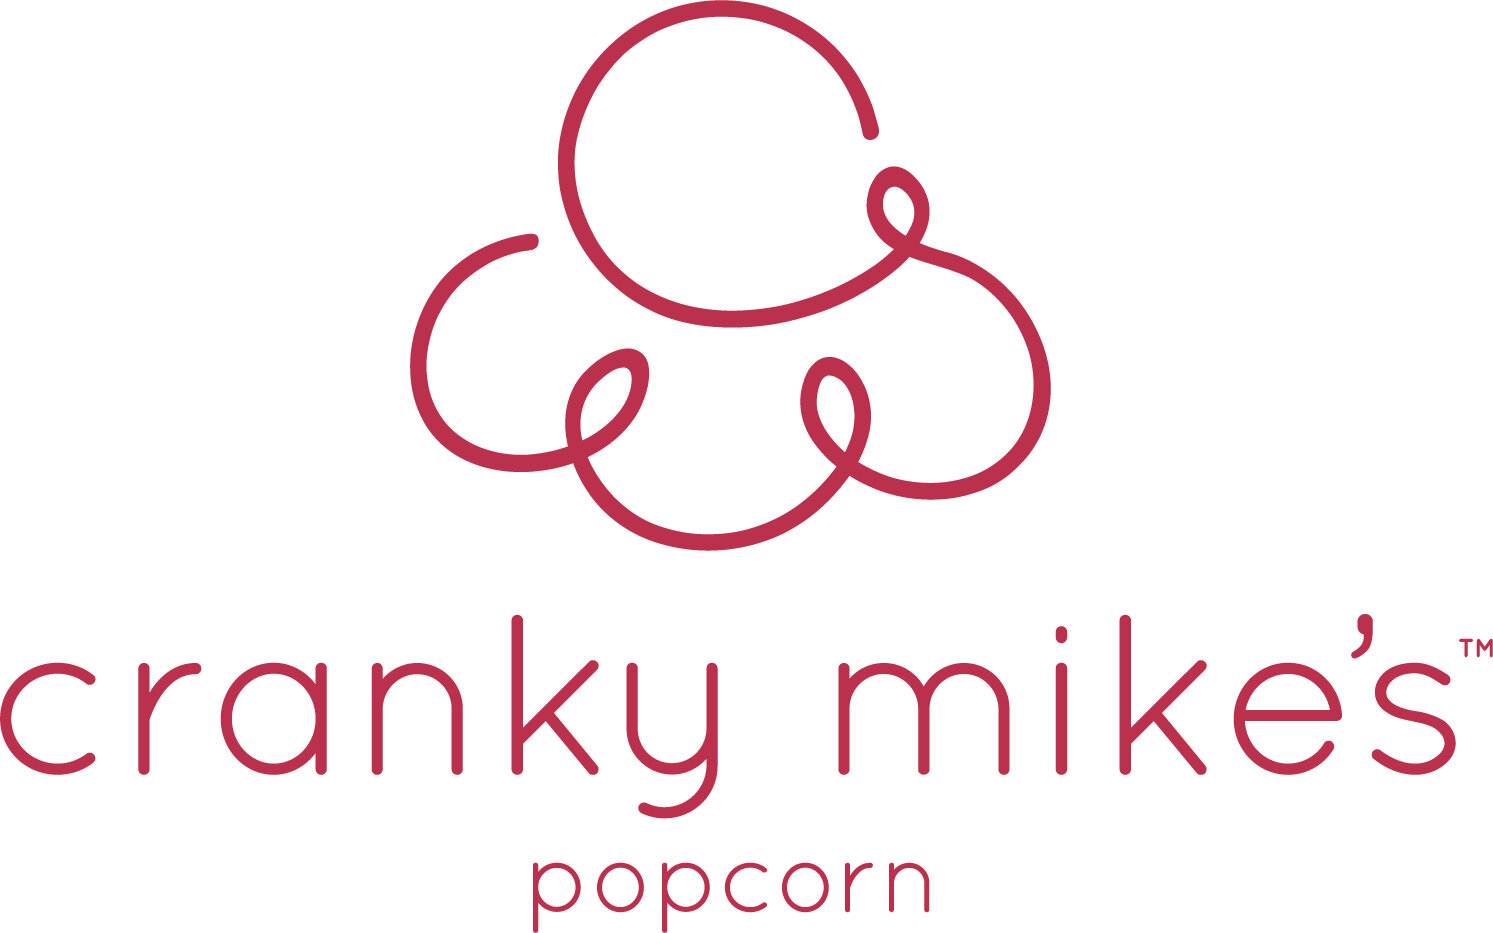 Cranky Mike's Popcorn